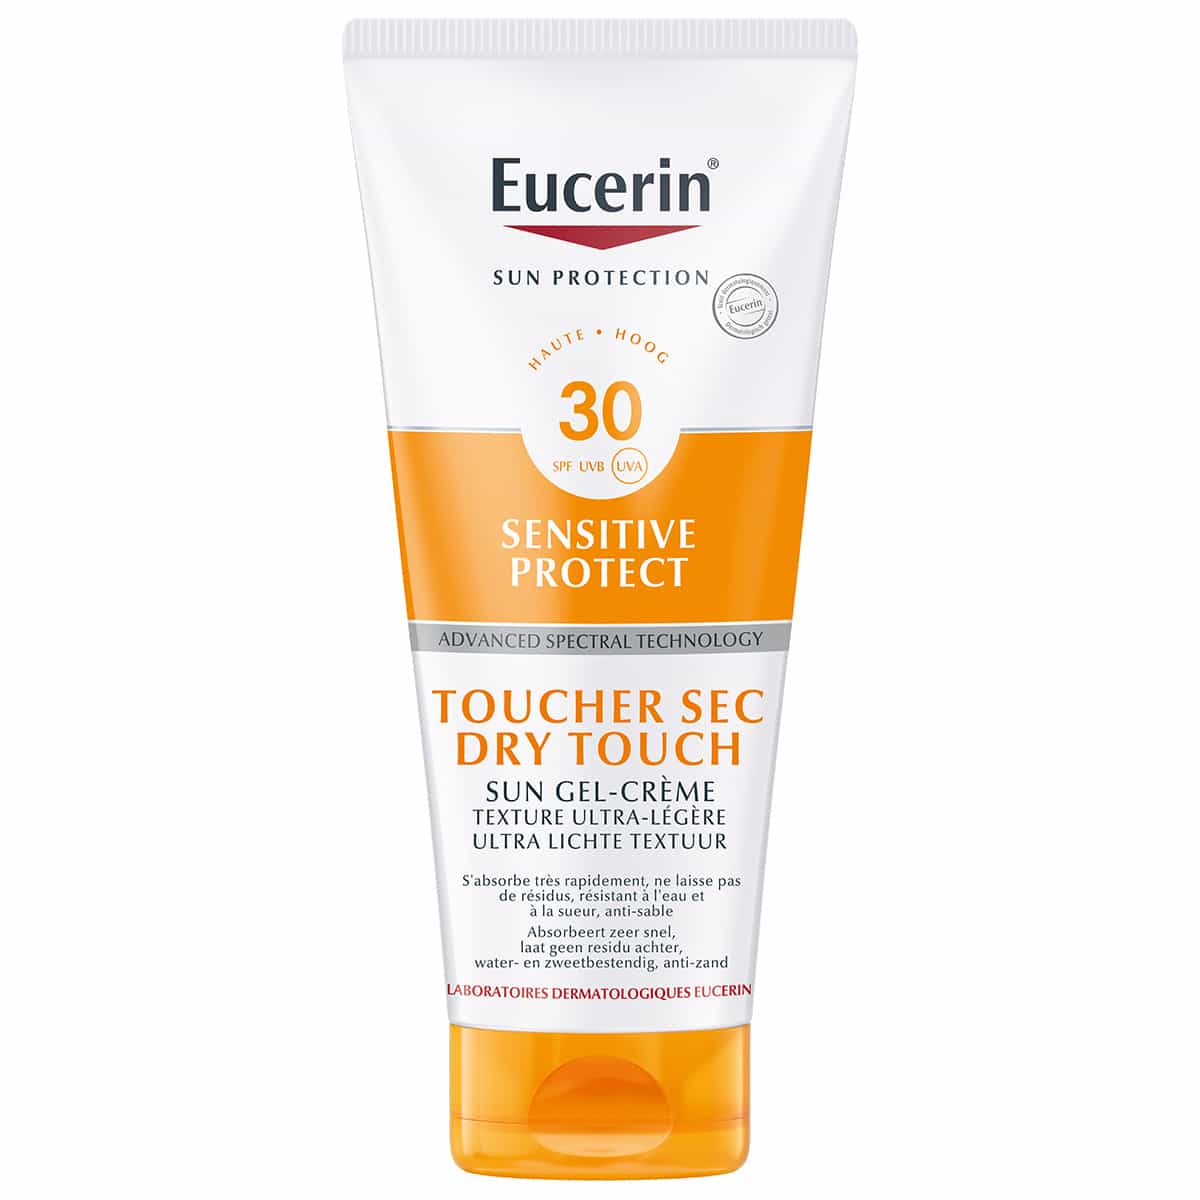 vervaldatum overdrijven telefoon Zonnecrème Eucerin Sun Dry-touch - Plakt niet & absorbeert zéér snel